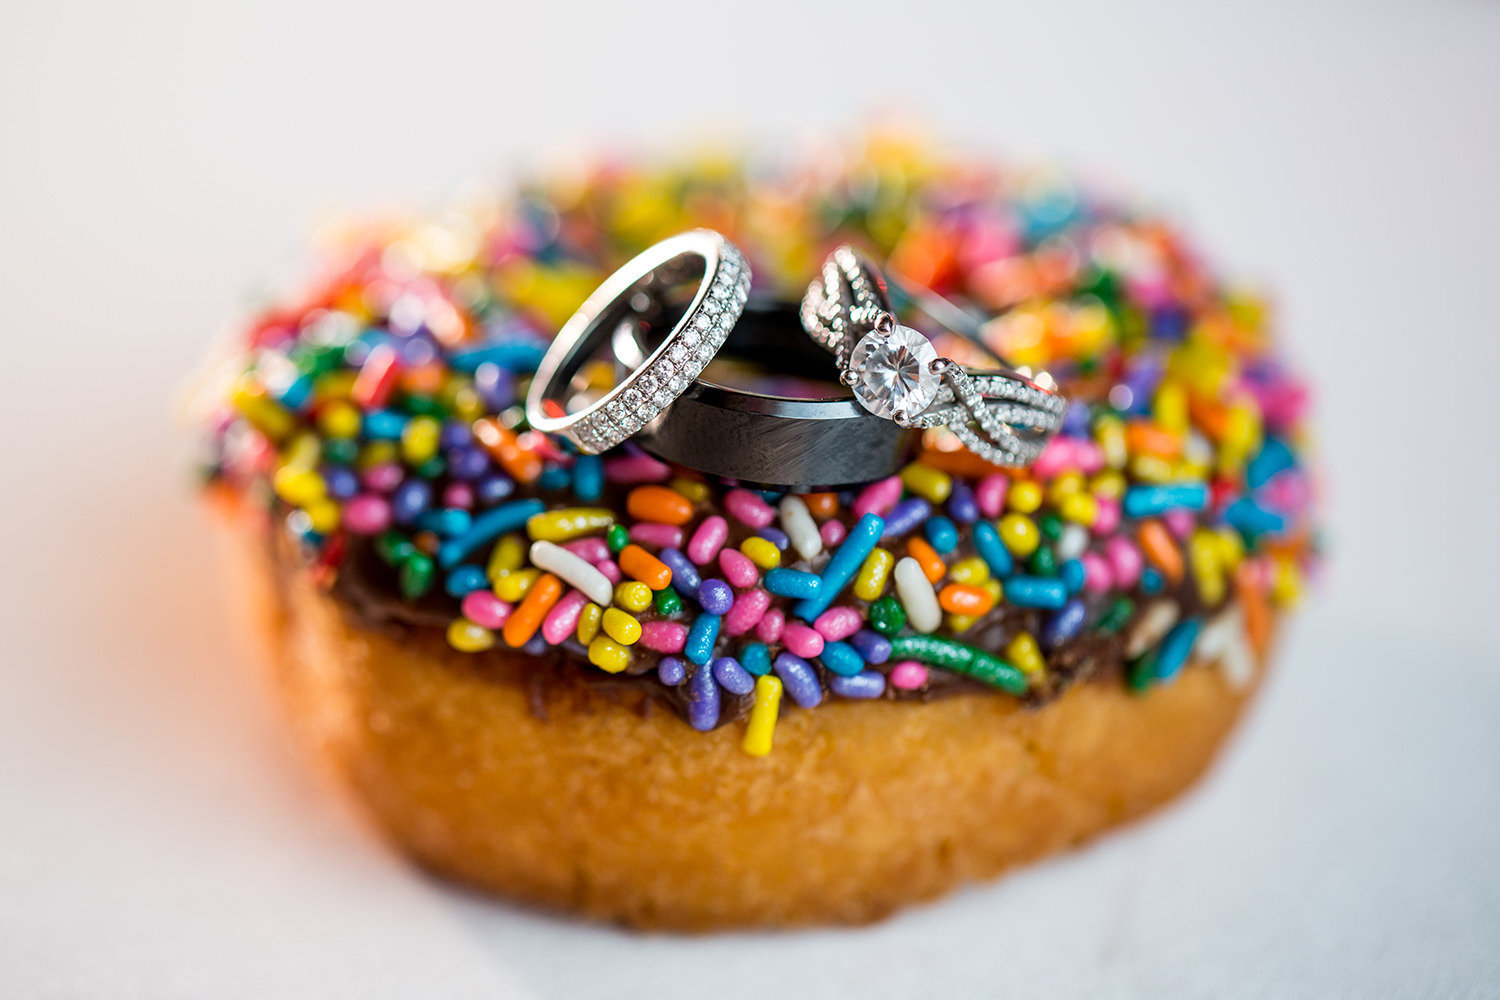 rings on a sprinkle donut